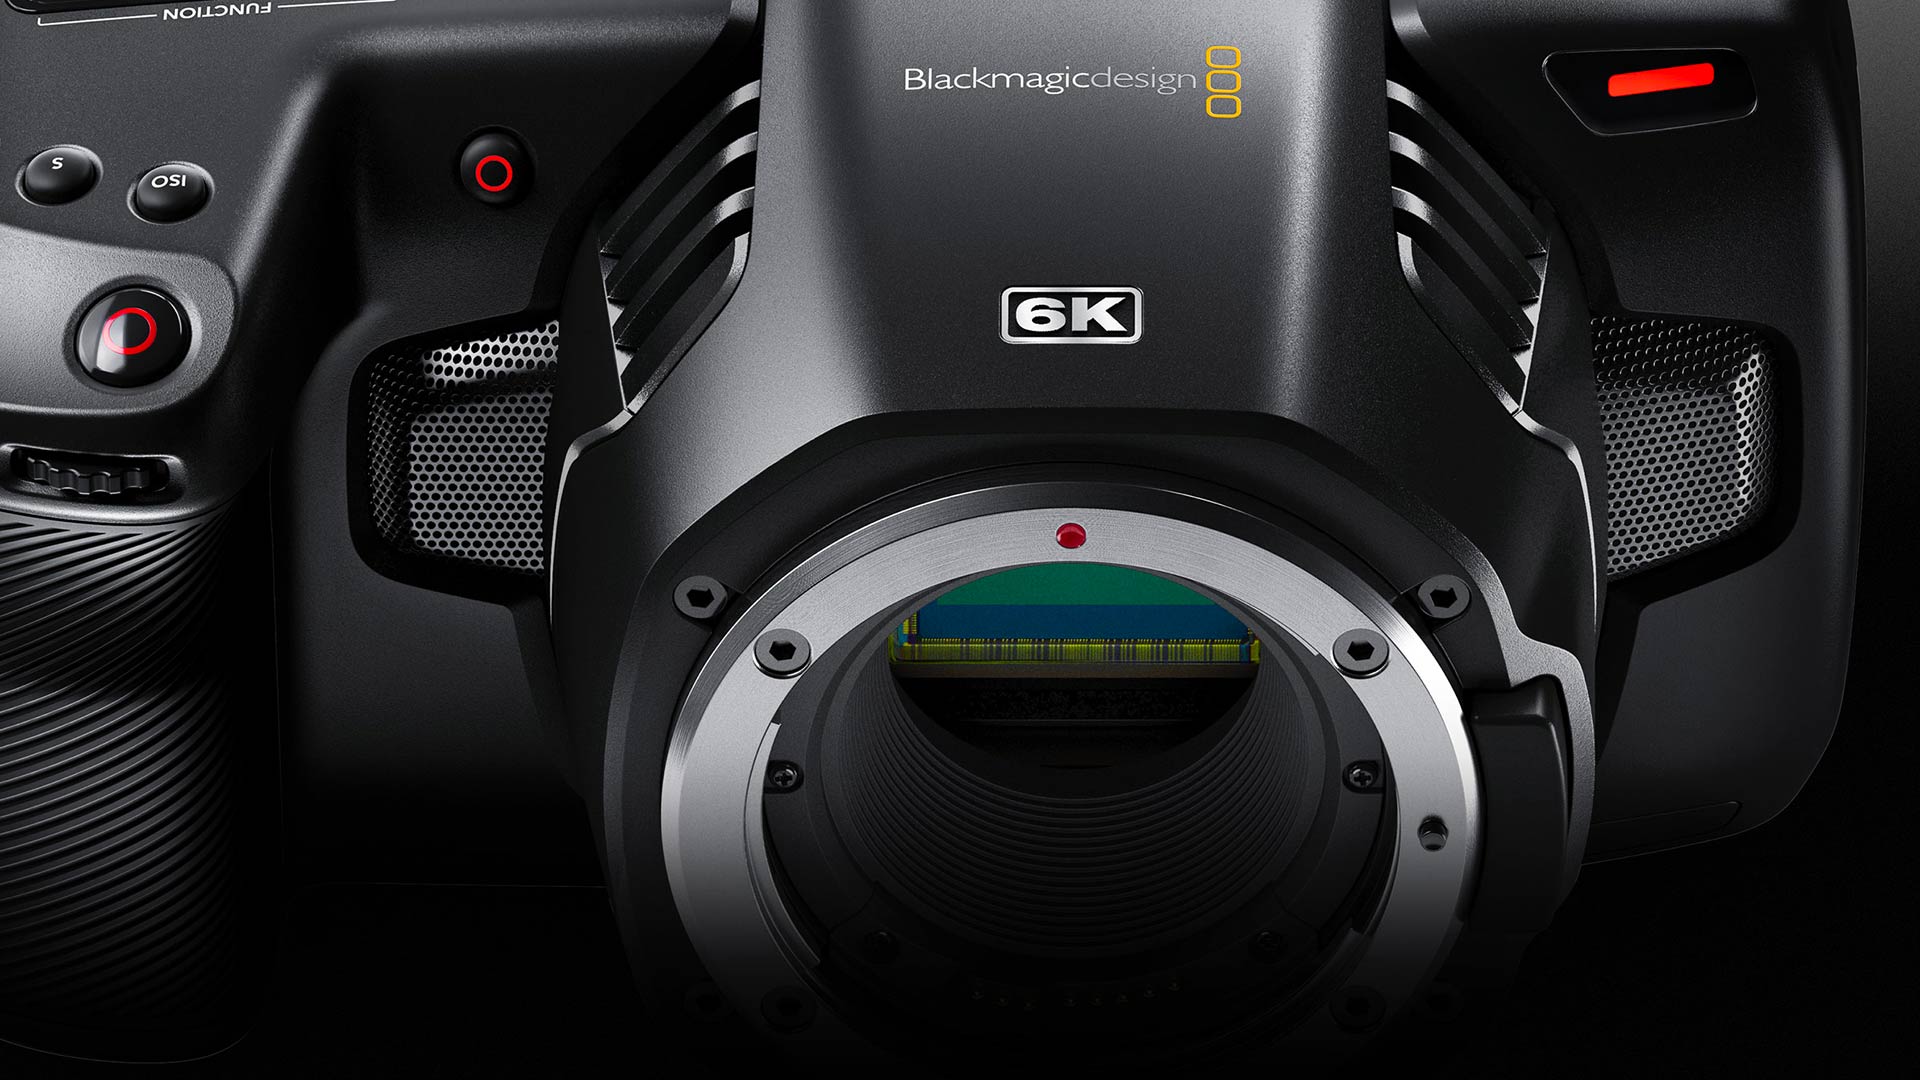 bmpcc 6k blackmagic pocket cinema camera